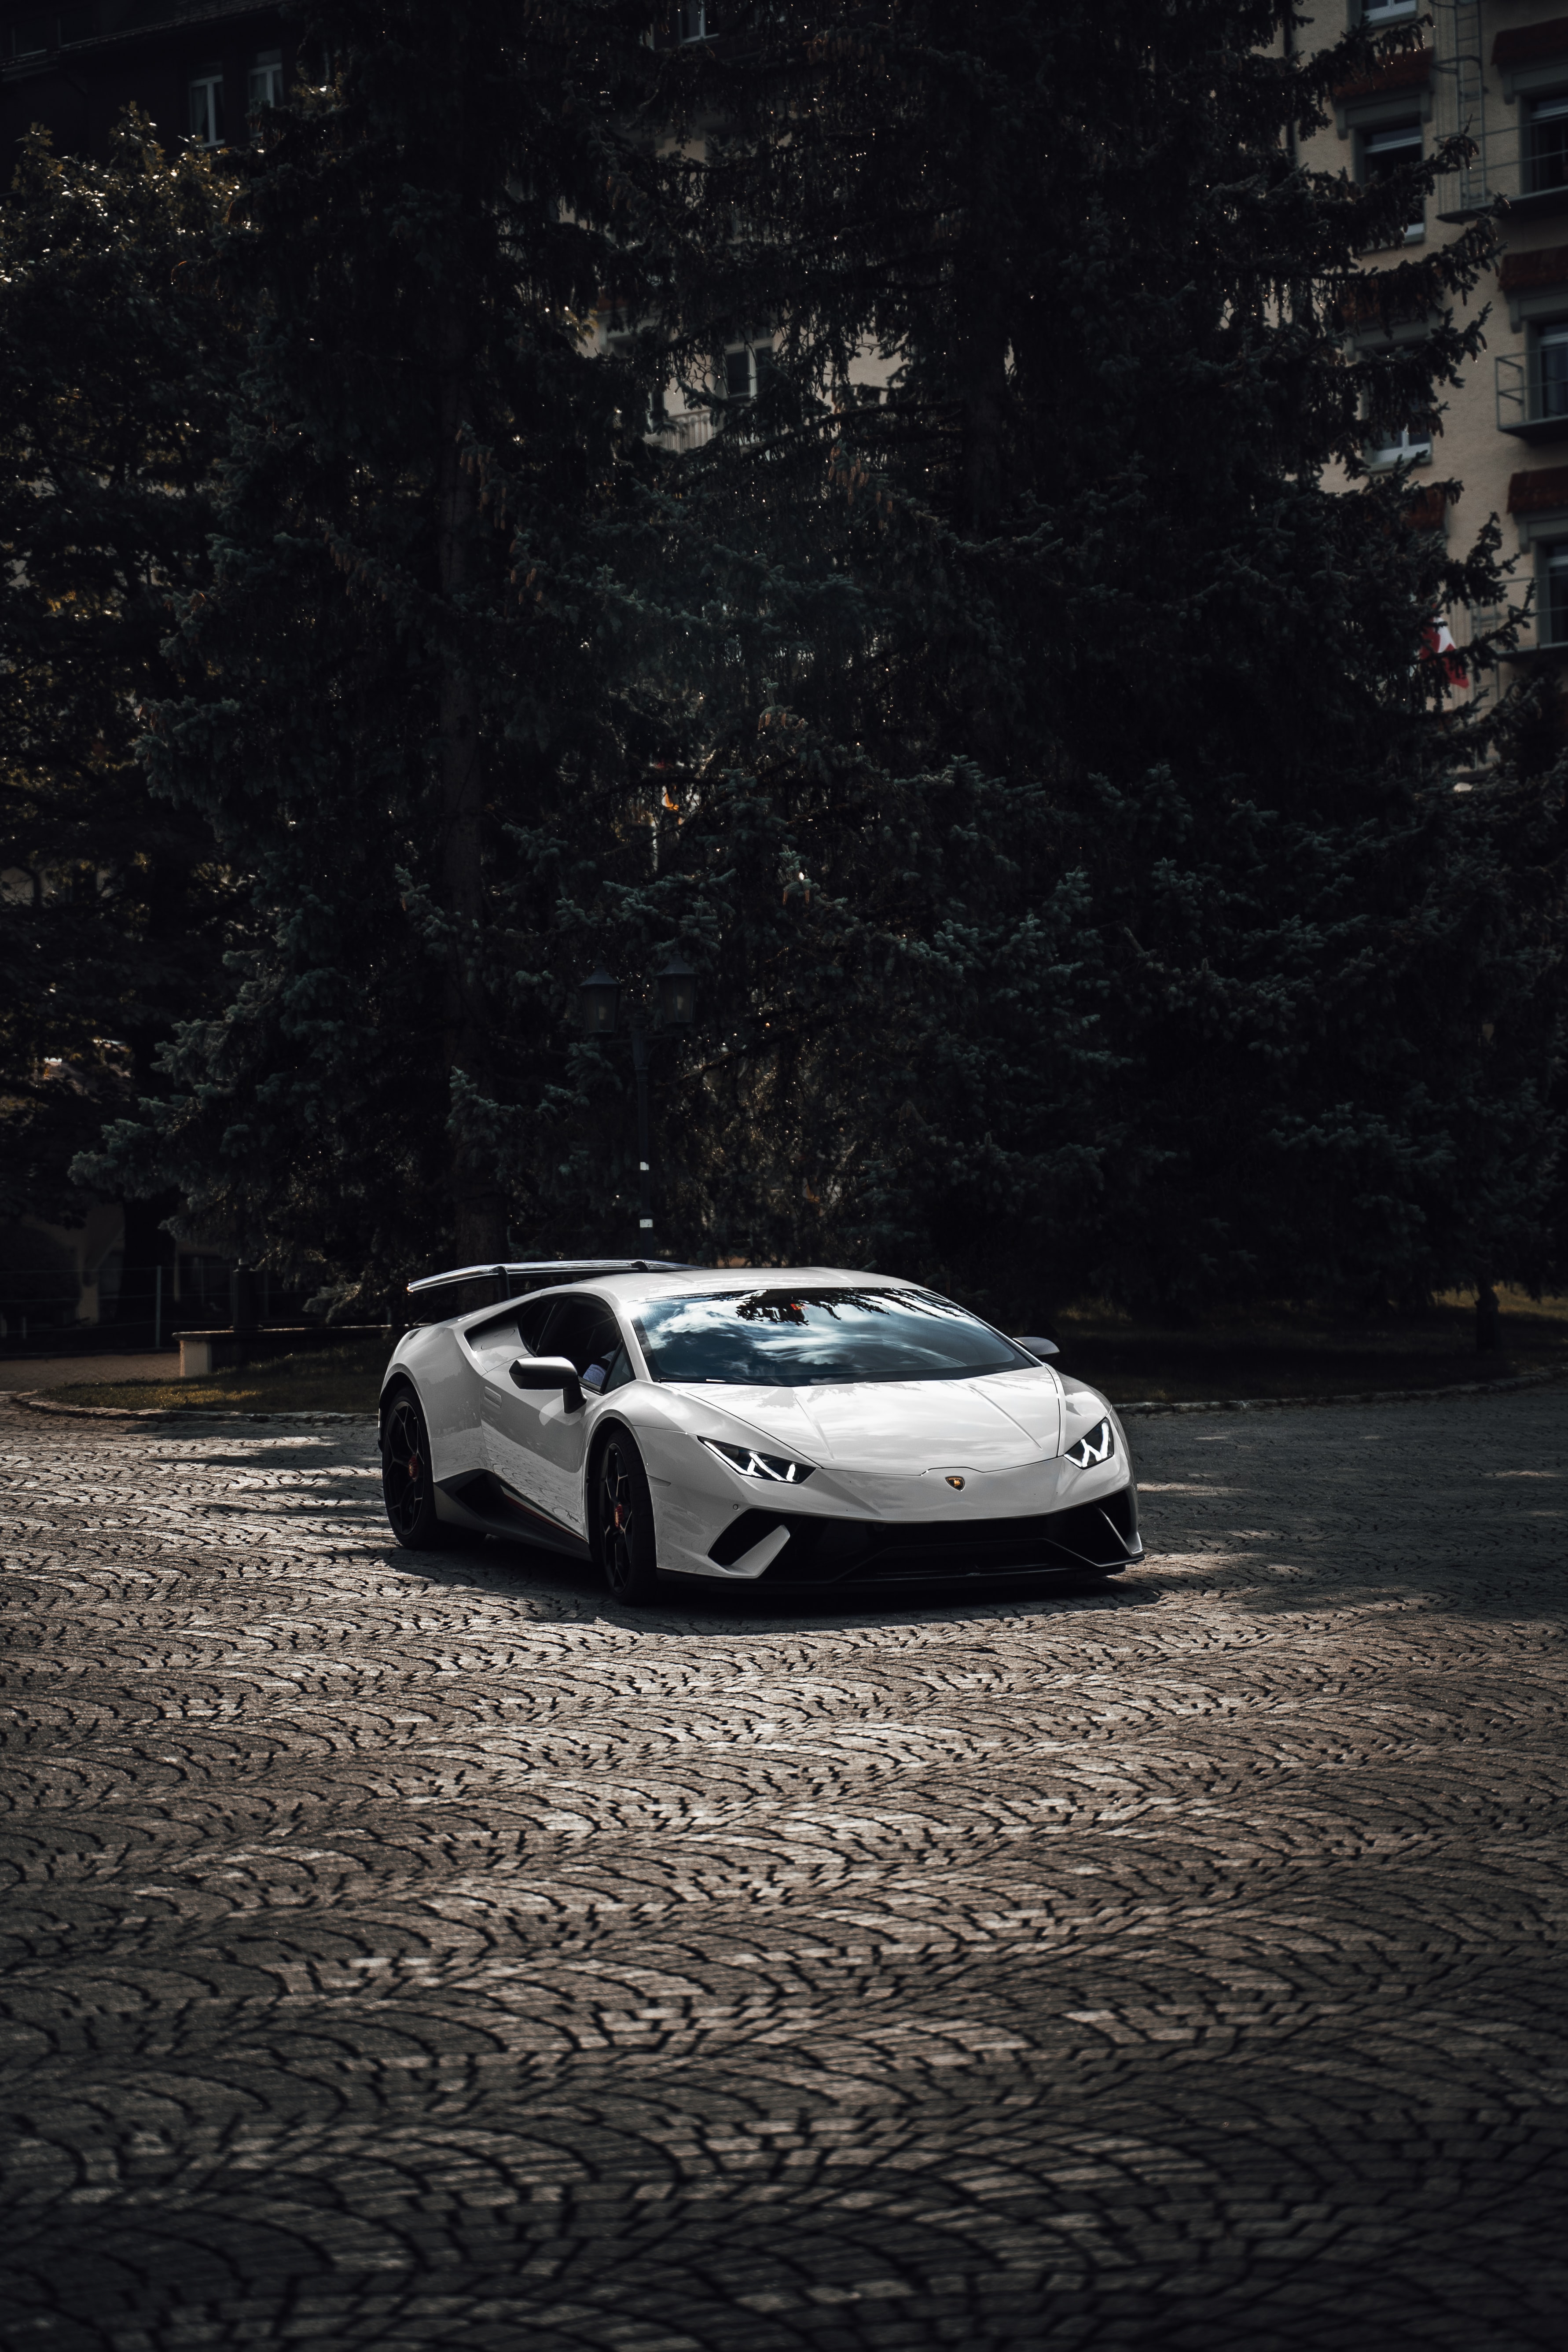 1080p Lamborghini Aventador Hd Images